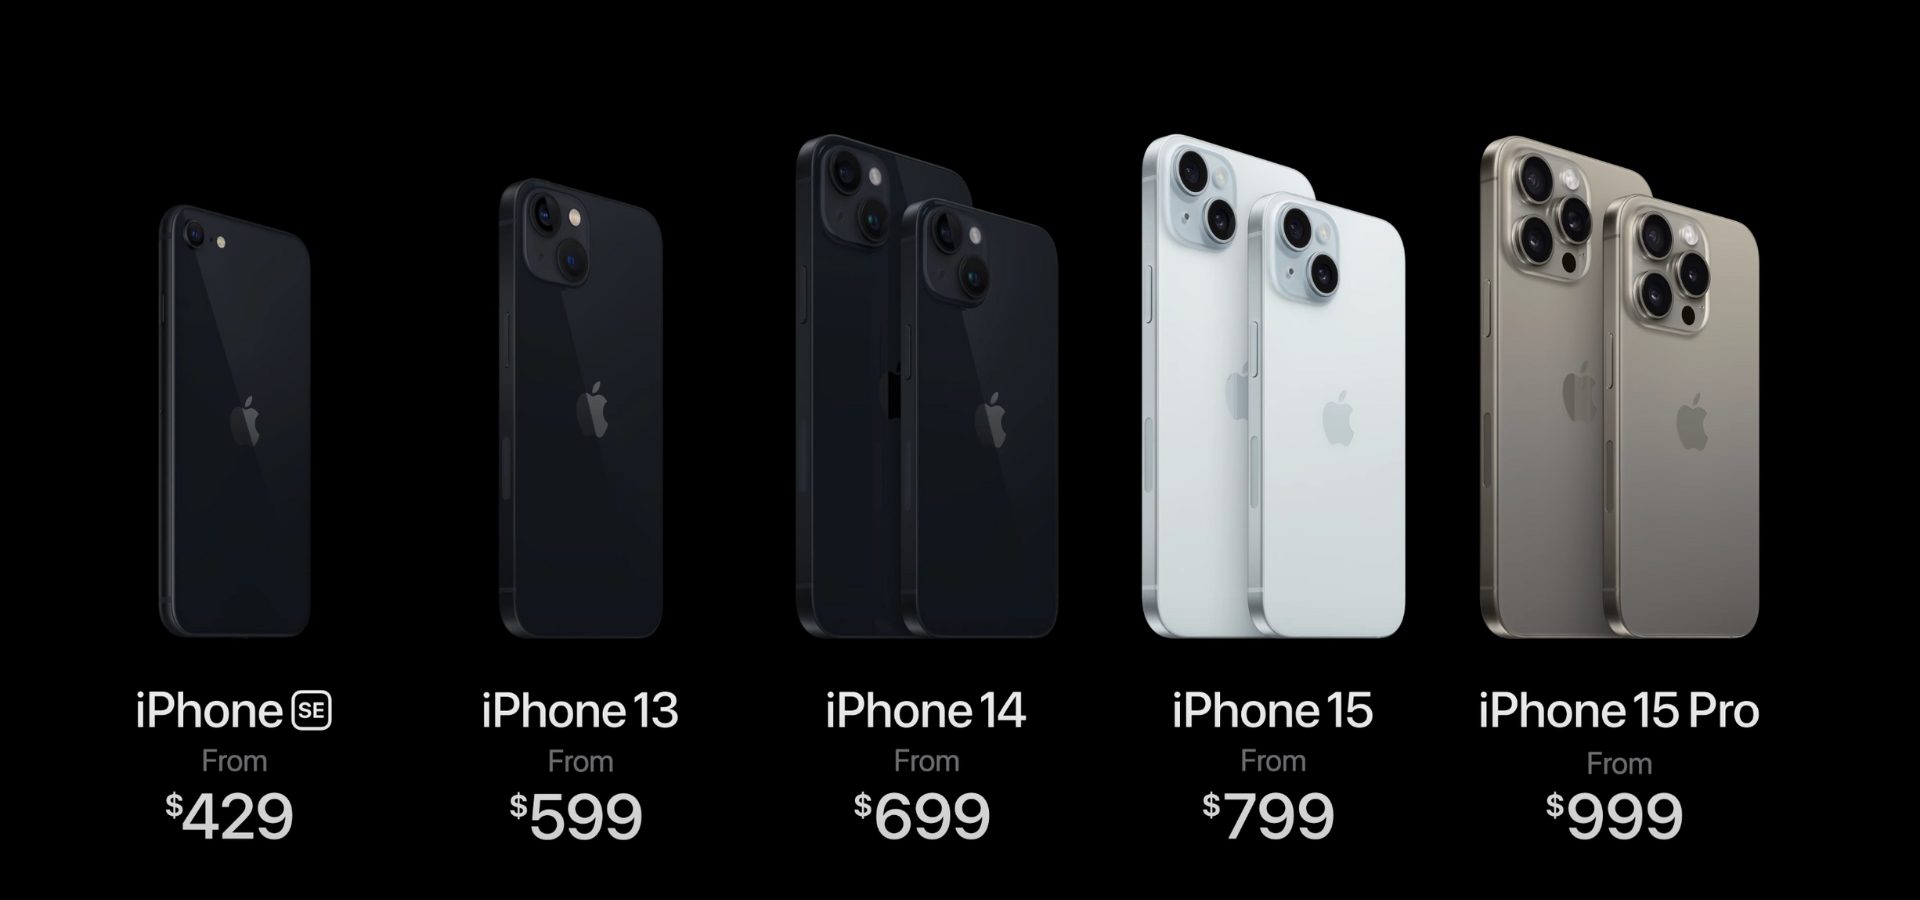 iPhone 15 prices